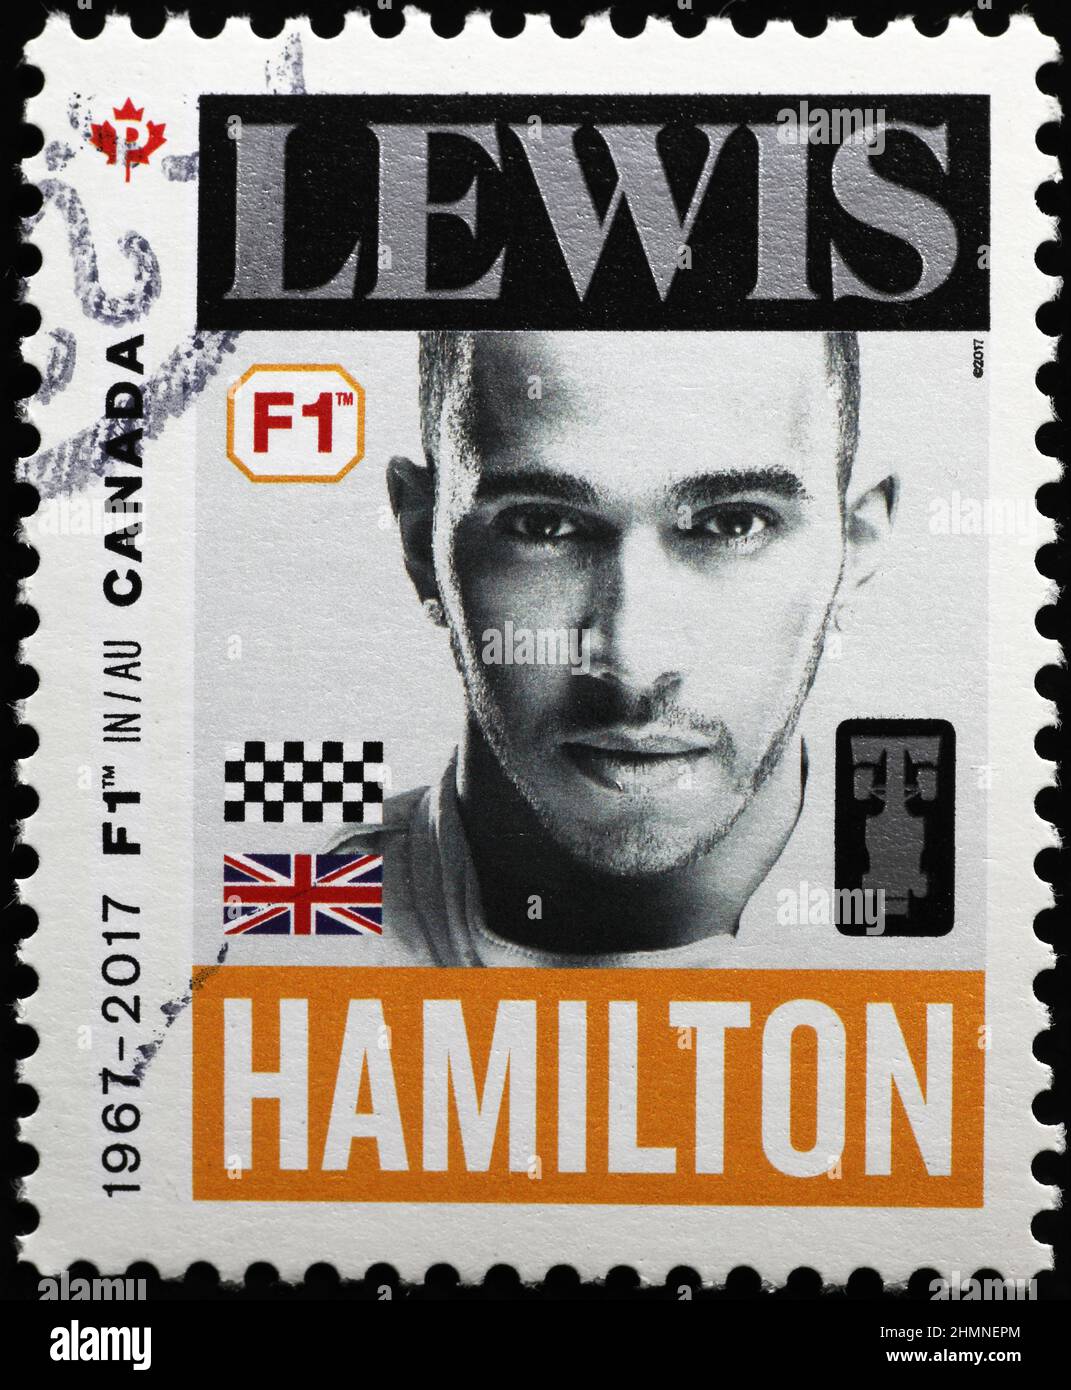 Lewis Hamilton portrait on postage stamp Stock Photo